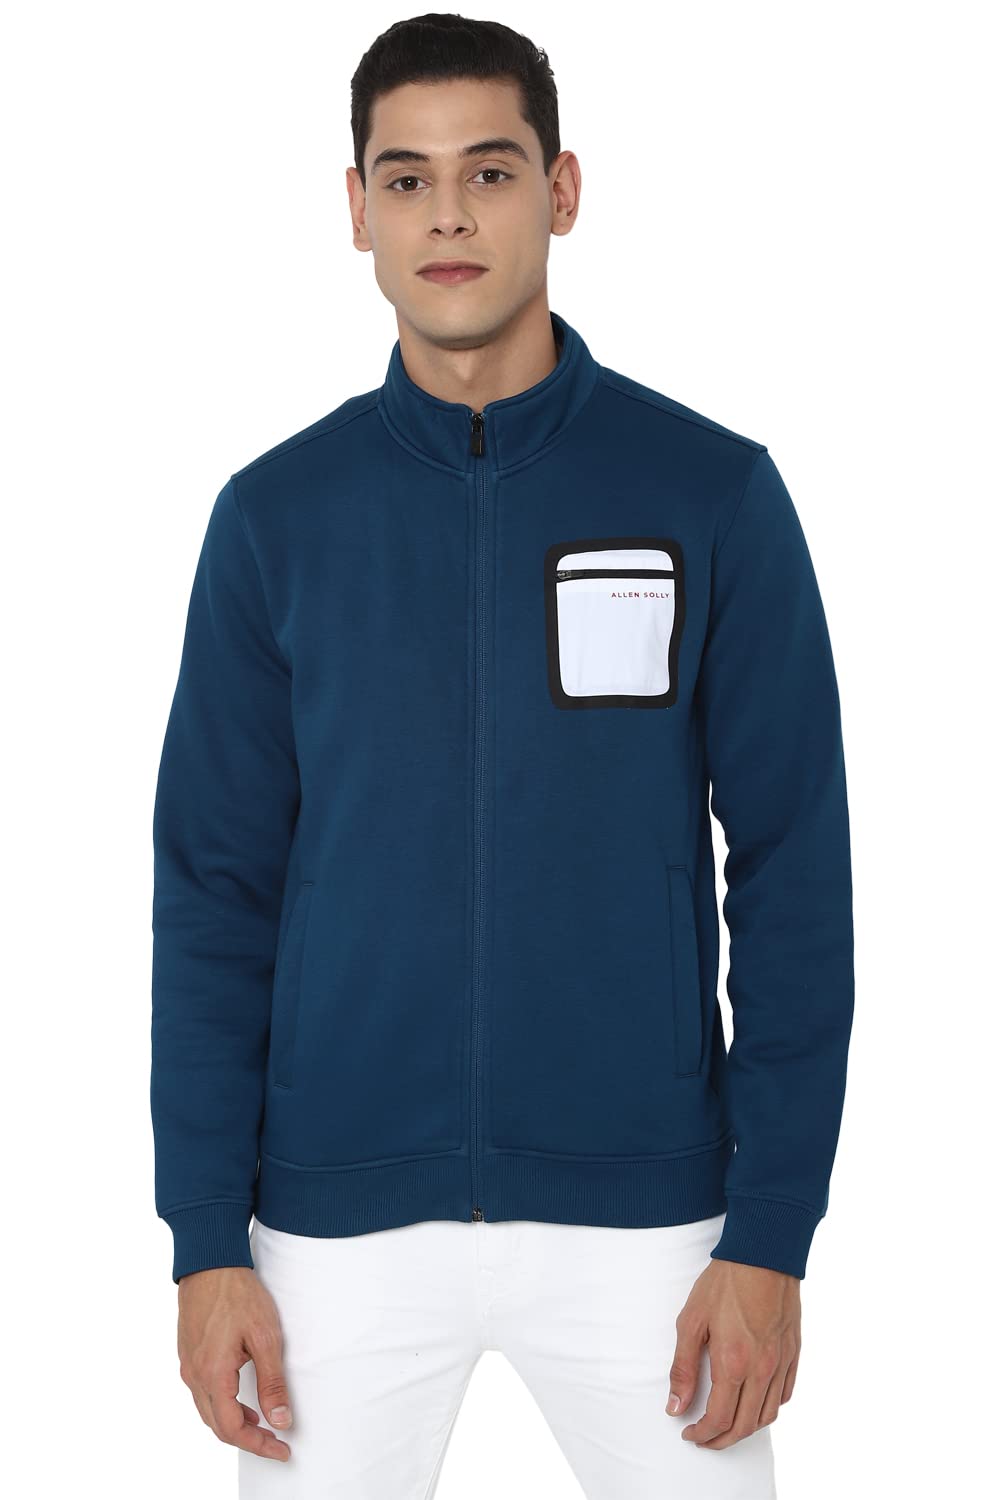 Allen Solly Men's Cotton High Neck Sweatshirt (ASSTFORGF241849_Blue_XL) 